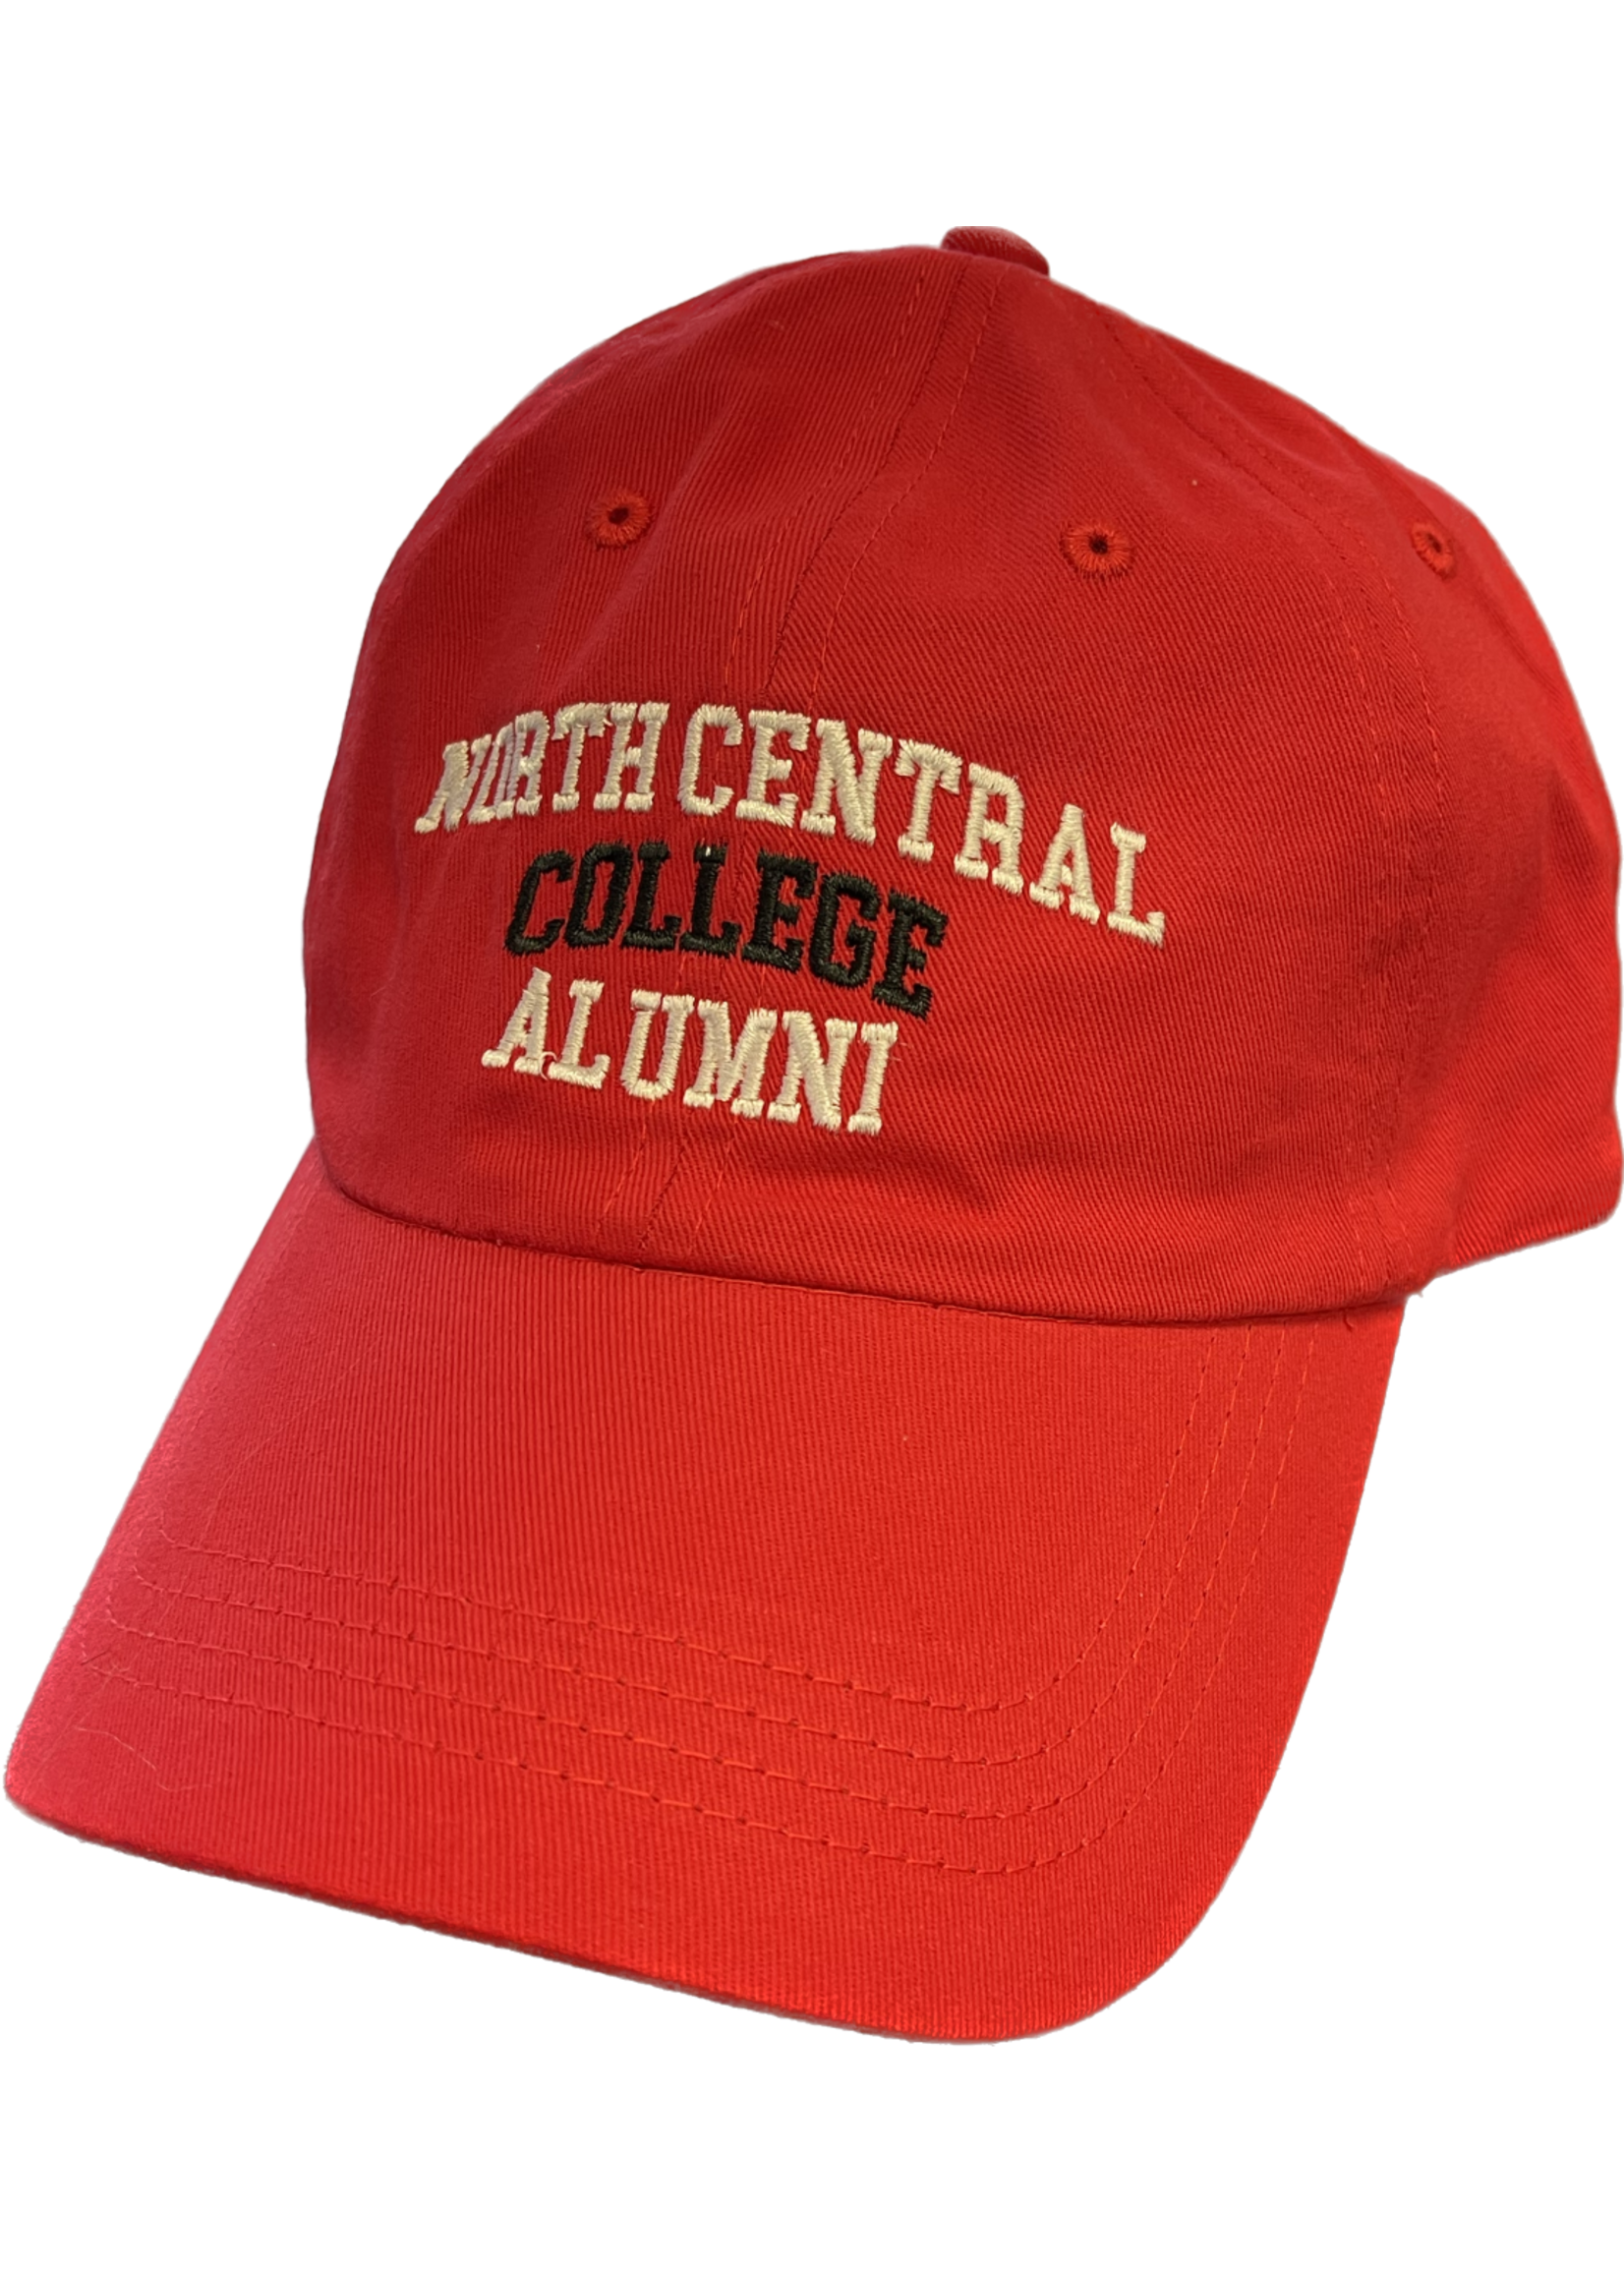 Cap America NCC Alumni Hat Low Pro  w/velcro closure